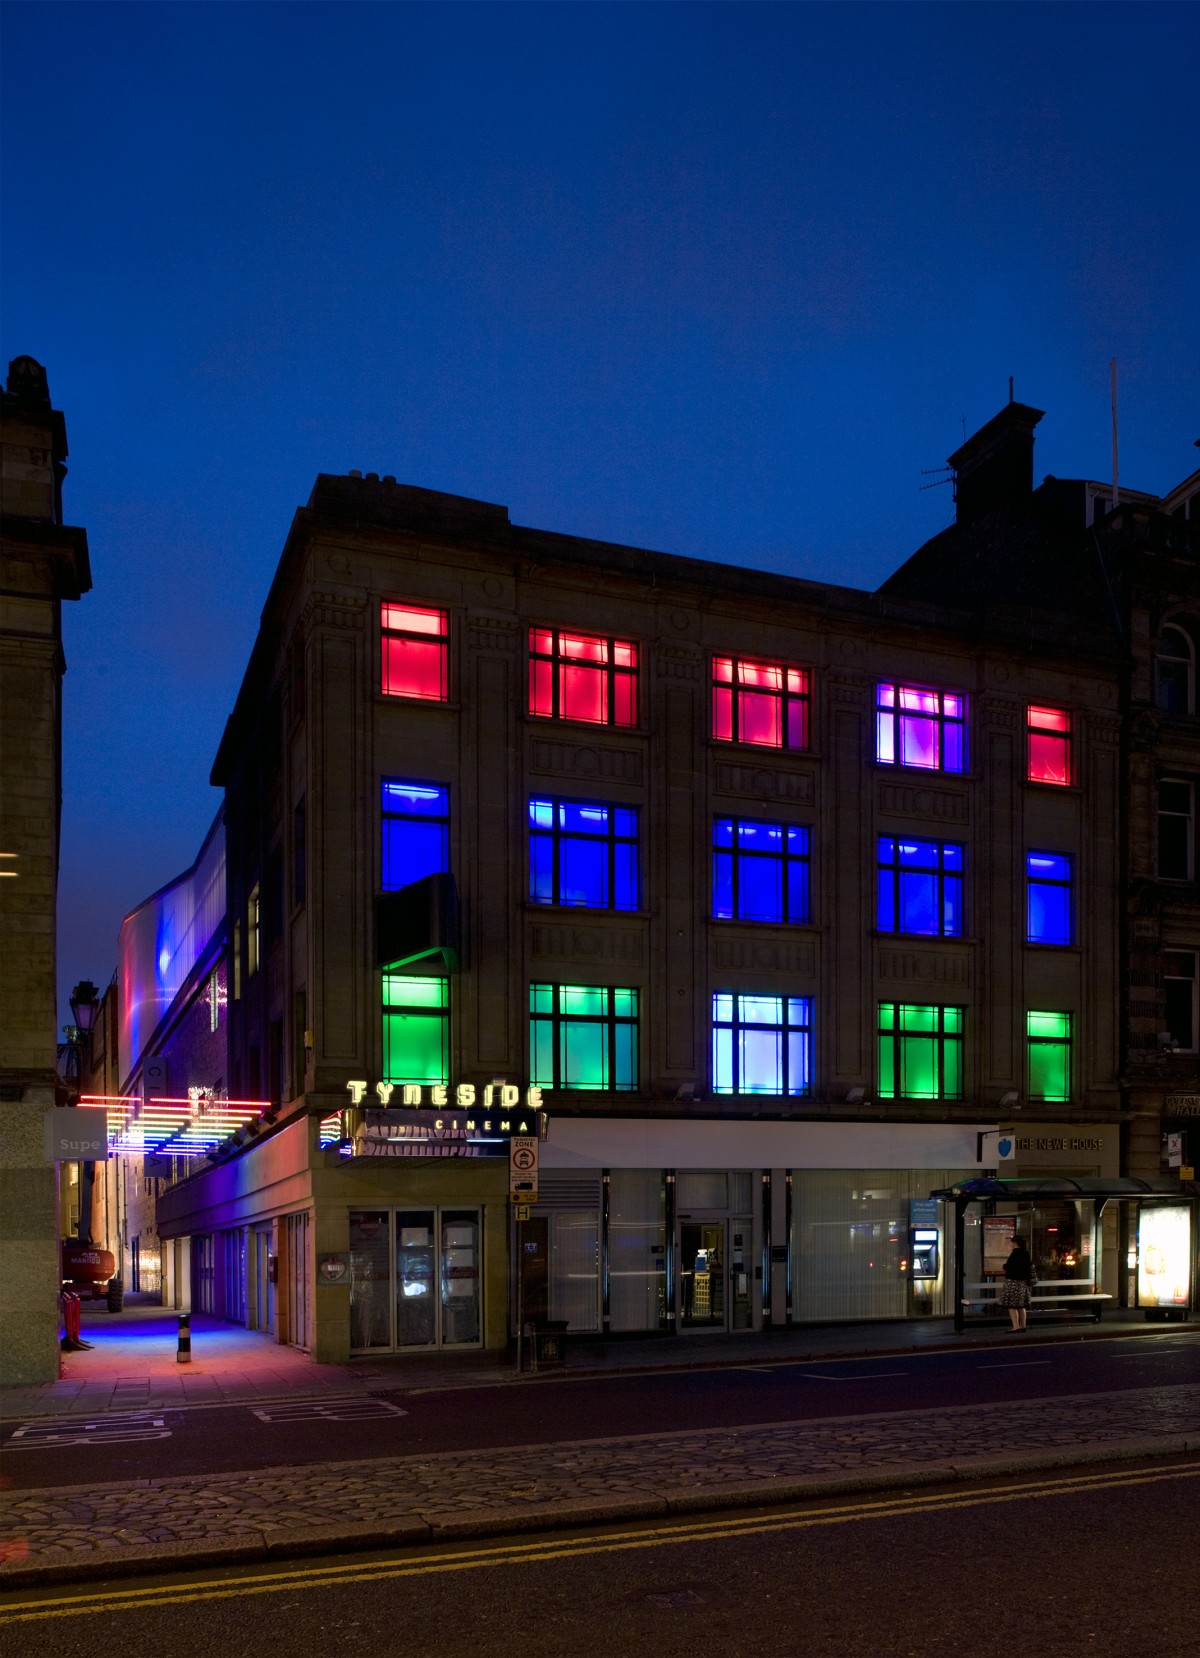 Tyneside Cinema (Image - Sally Ann Norman)